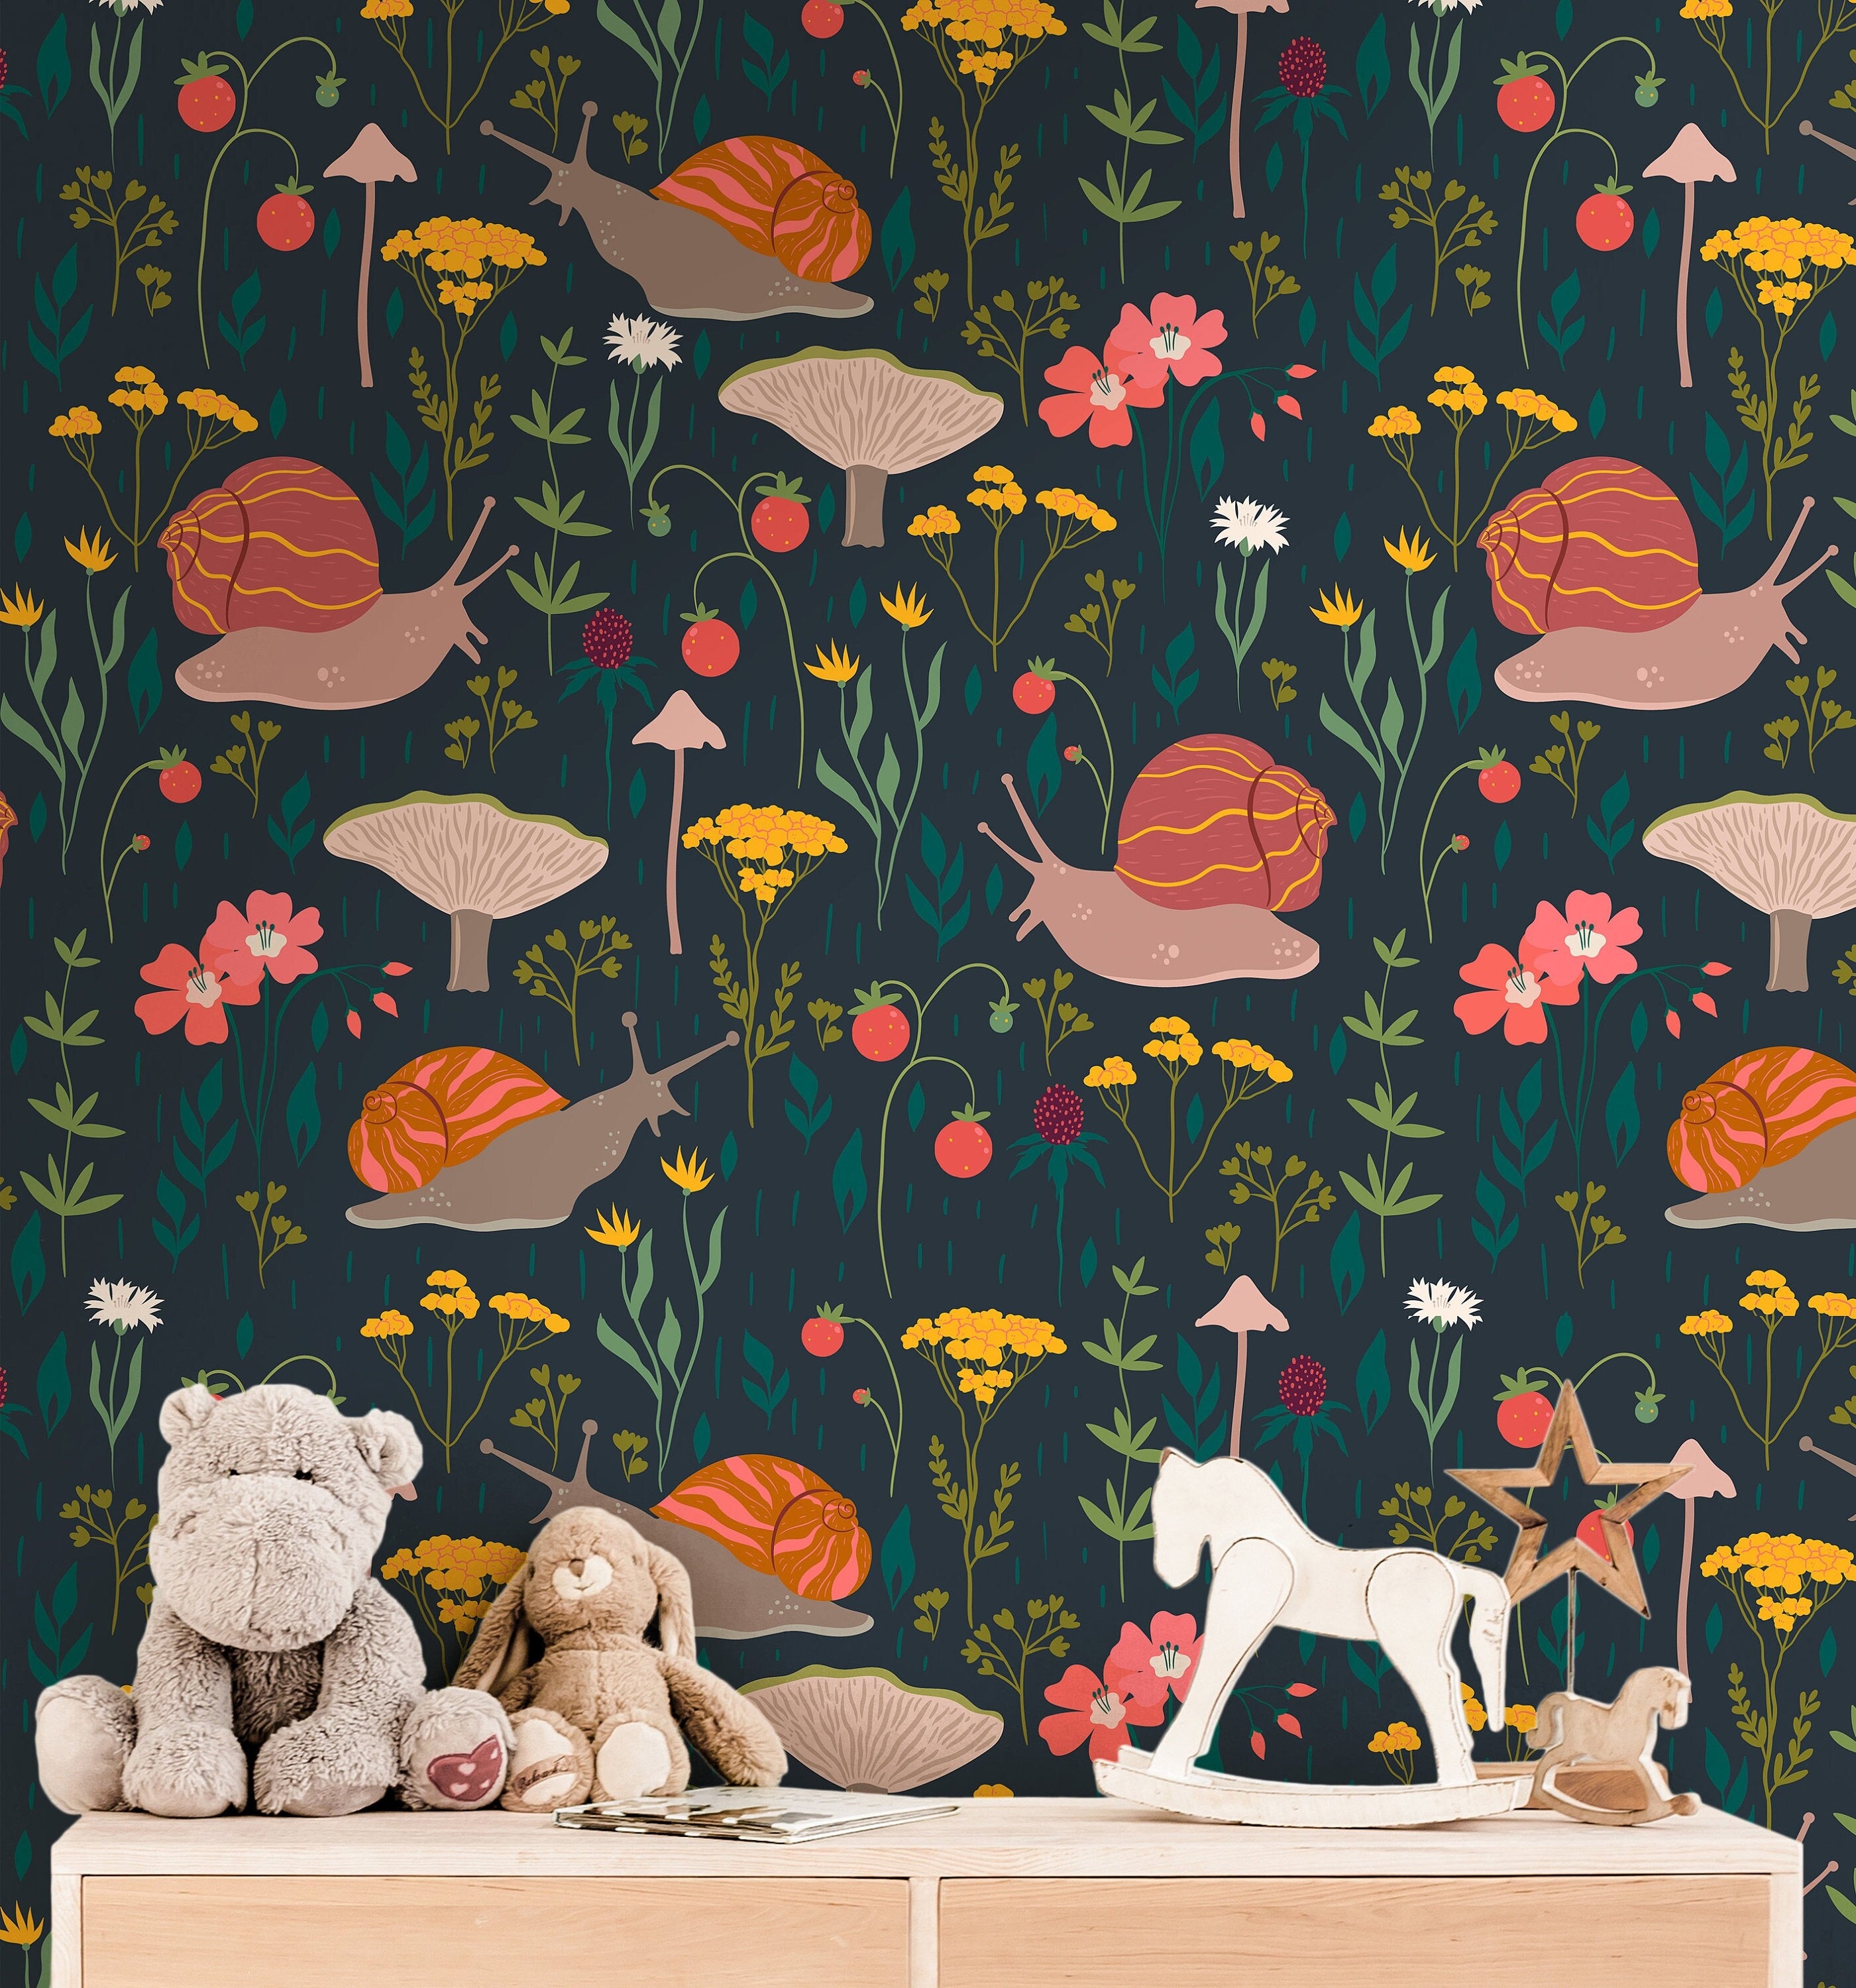 Snails Garden Floral Girls Wallpaper | Girls Nursery Wallpaper | Kids Wallpaper | Childrens Wallpaper | Peel Stick Removable Wallpaper | 47 - JamesAndColors